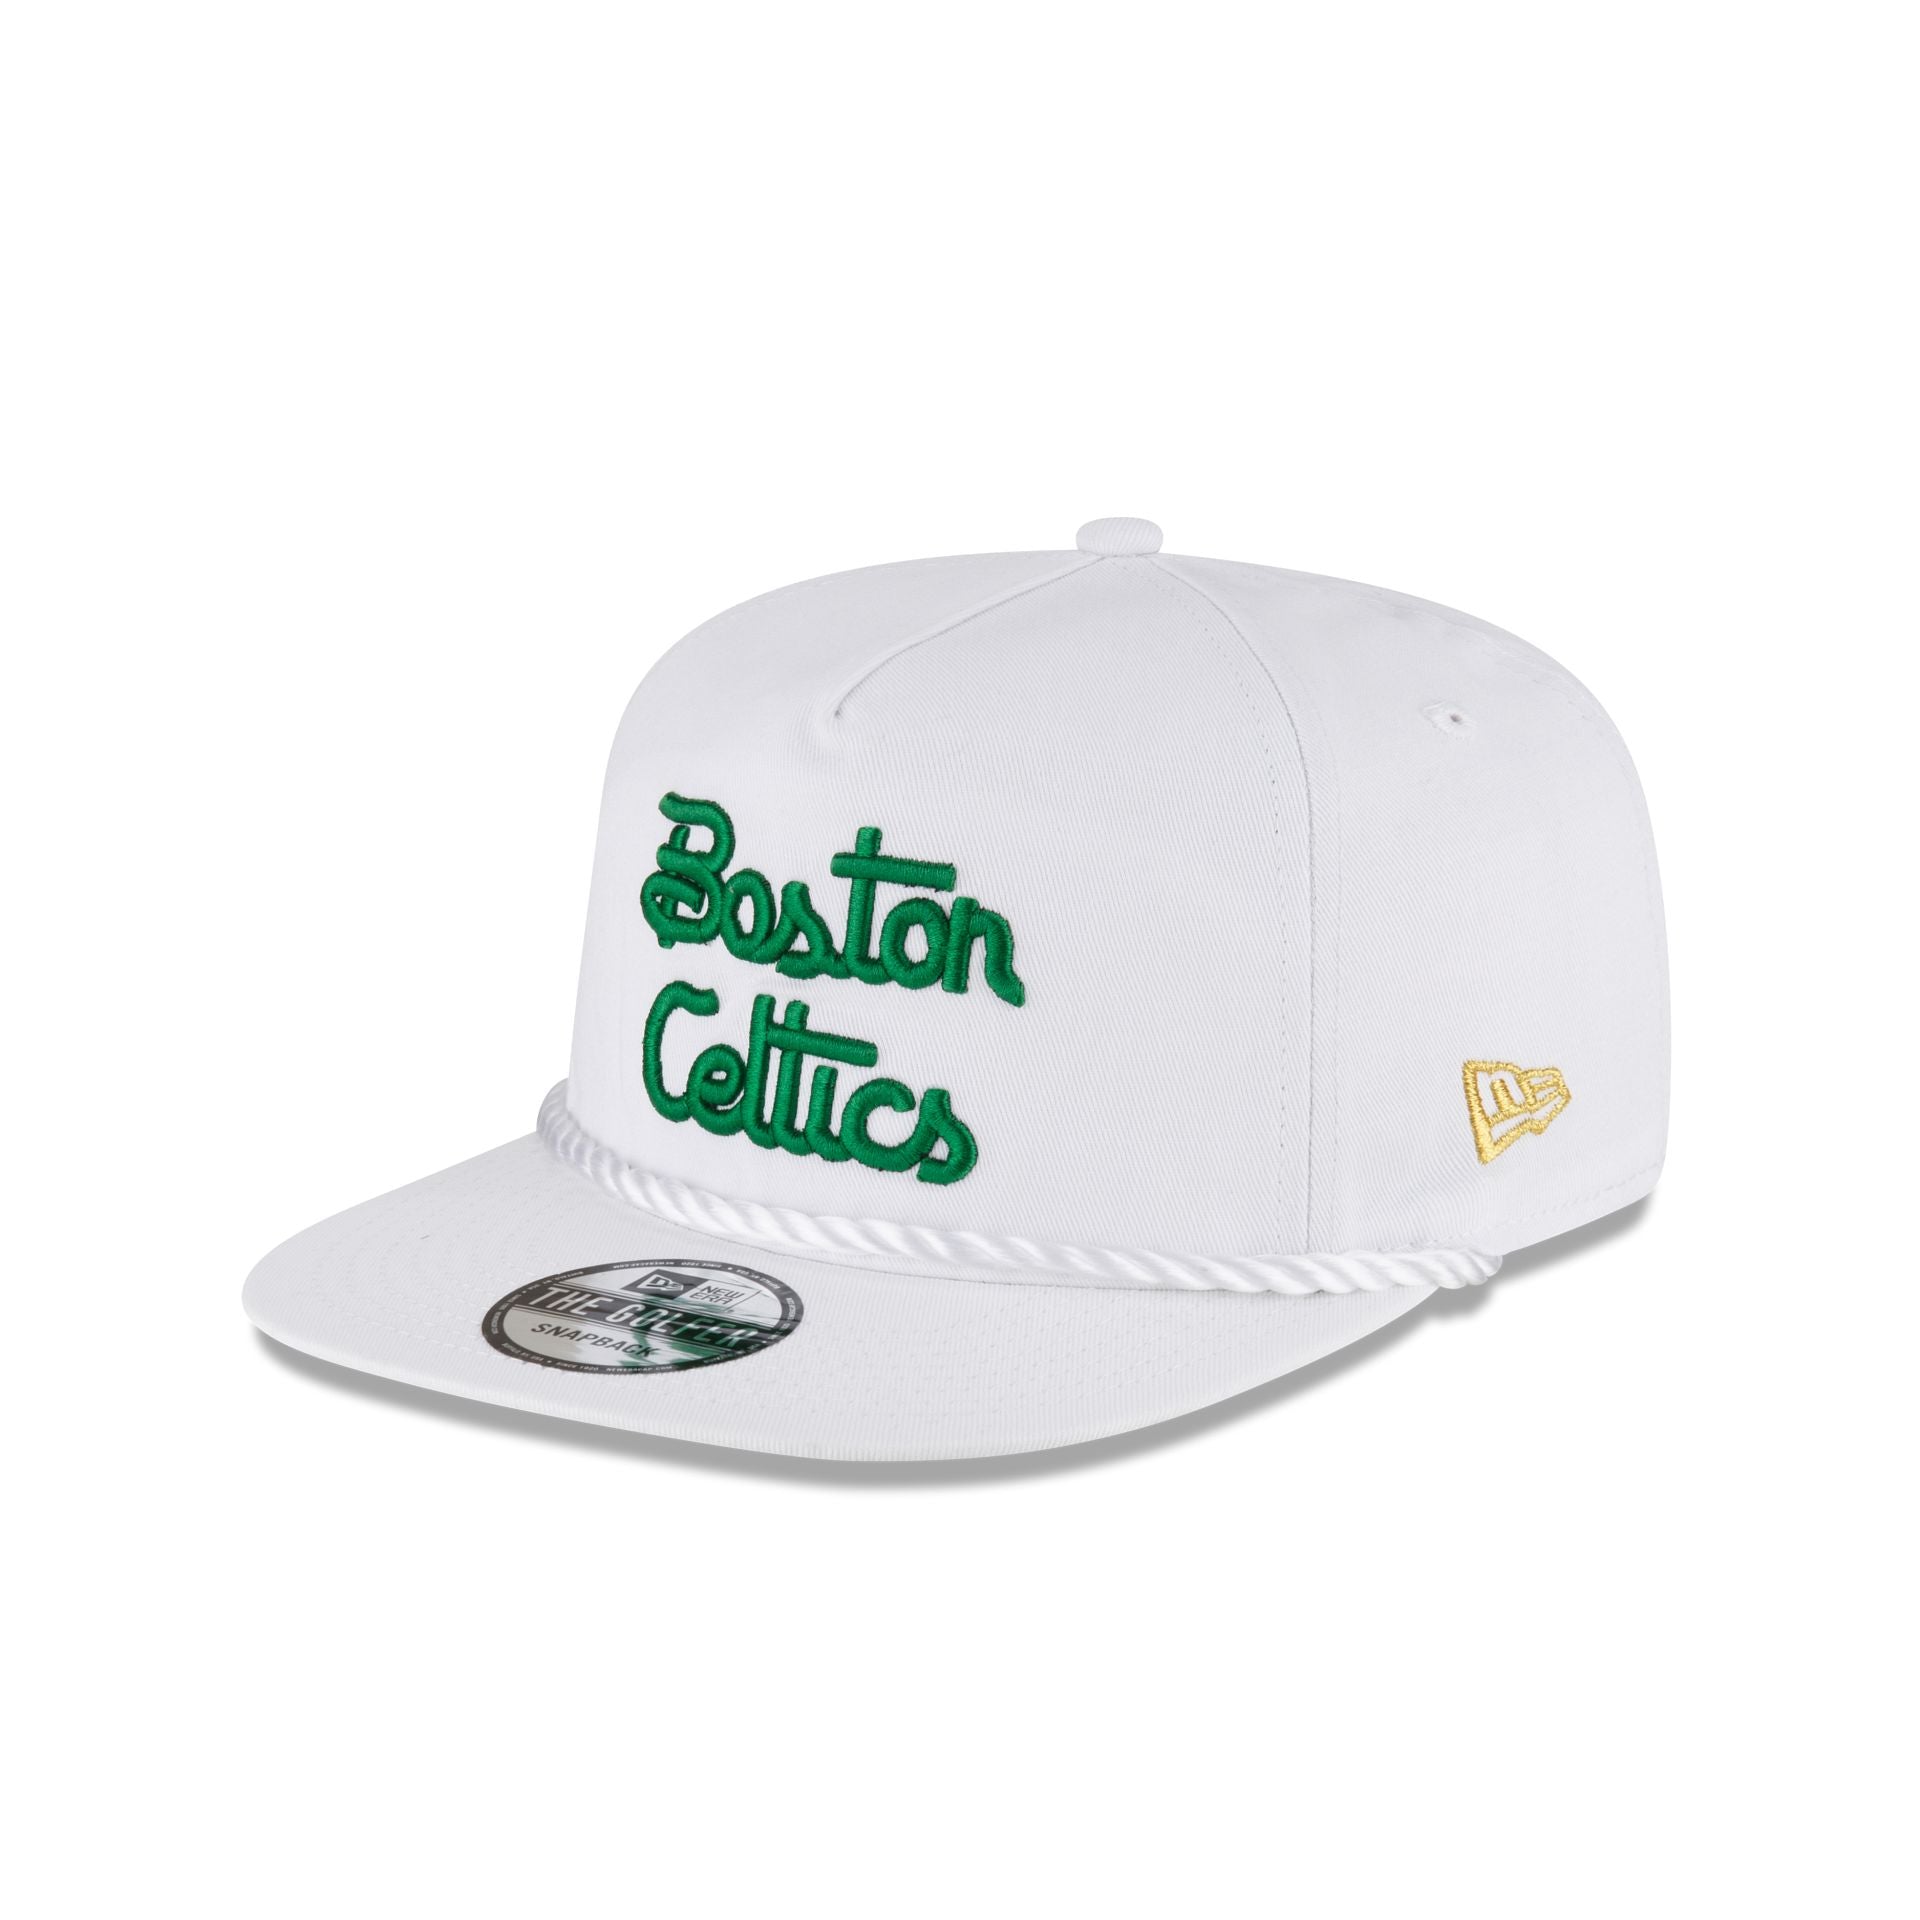 Boston Red Sox New Era Golfer Green Undervisor 9FIFTY Snapback Hat - Gray